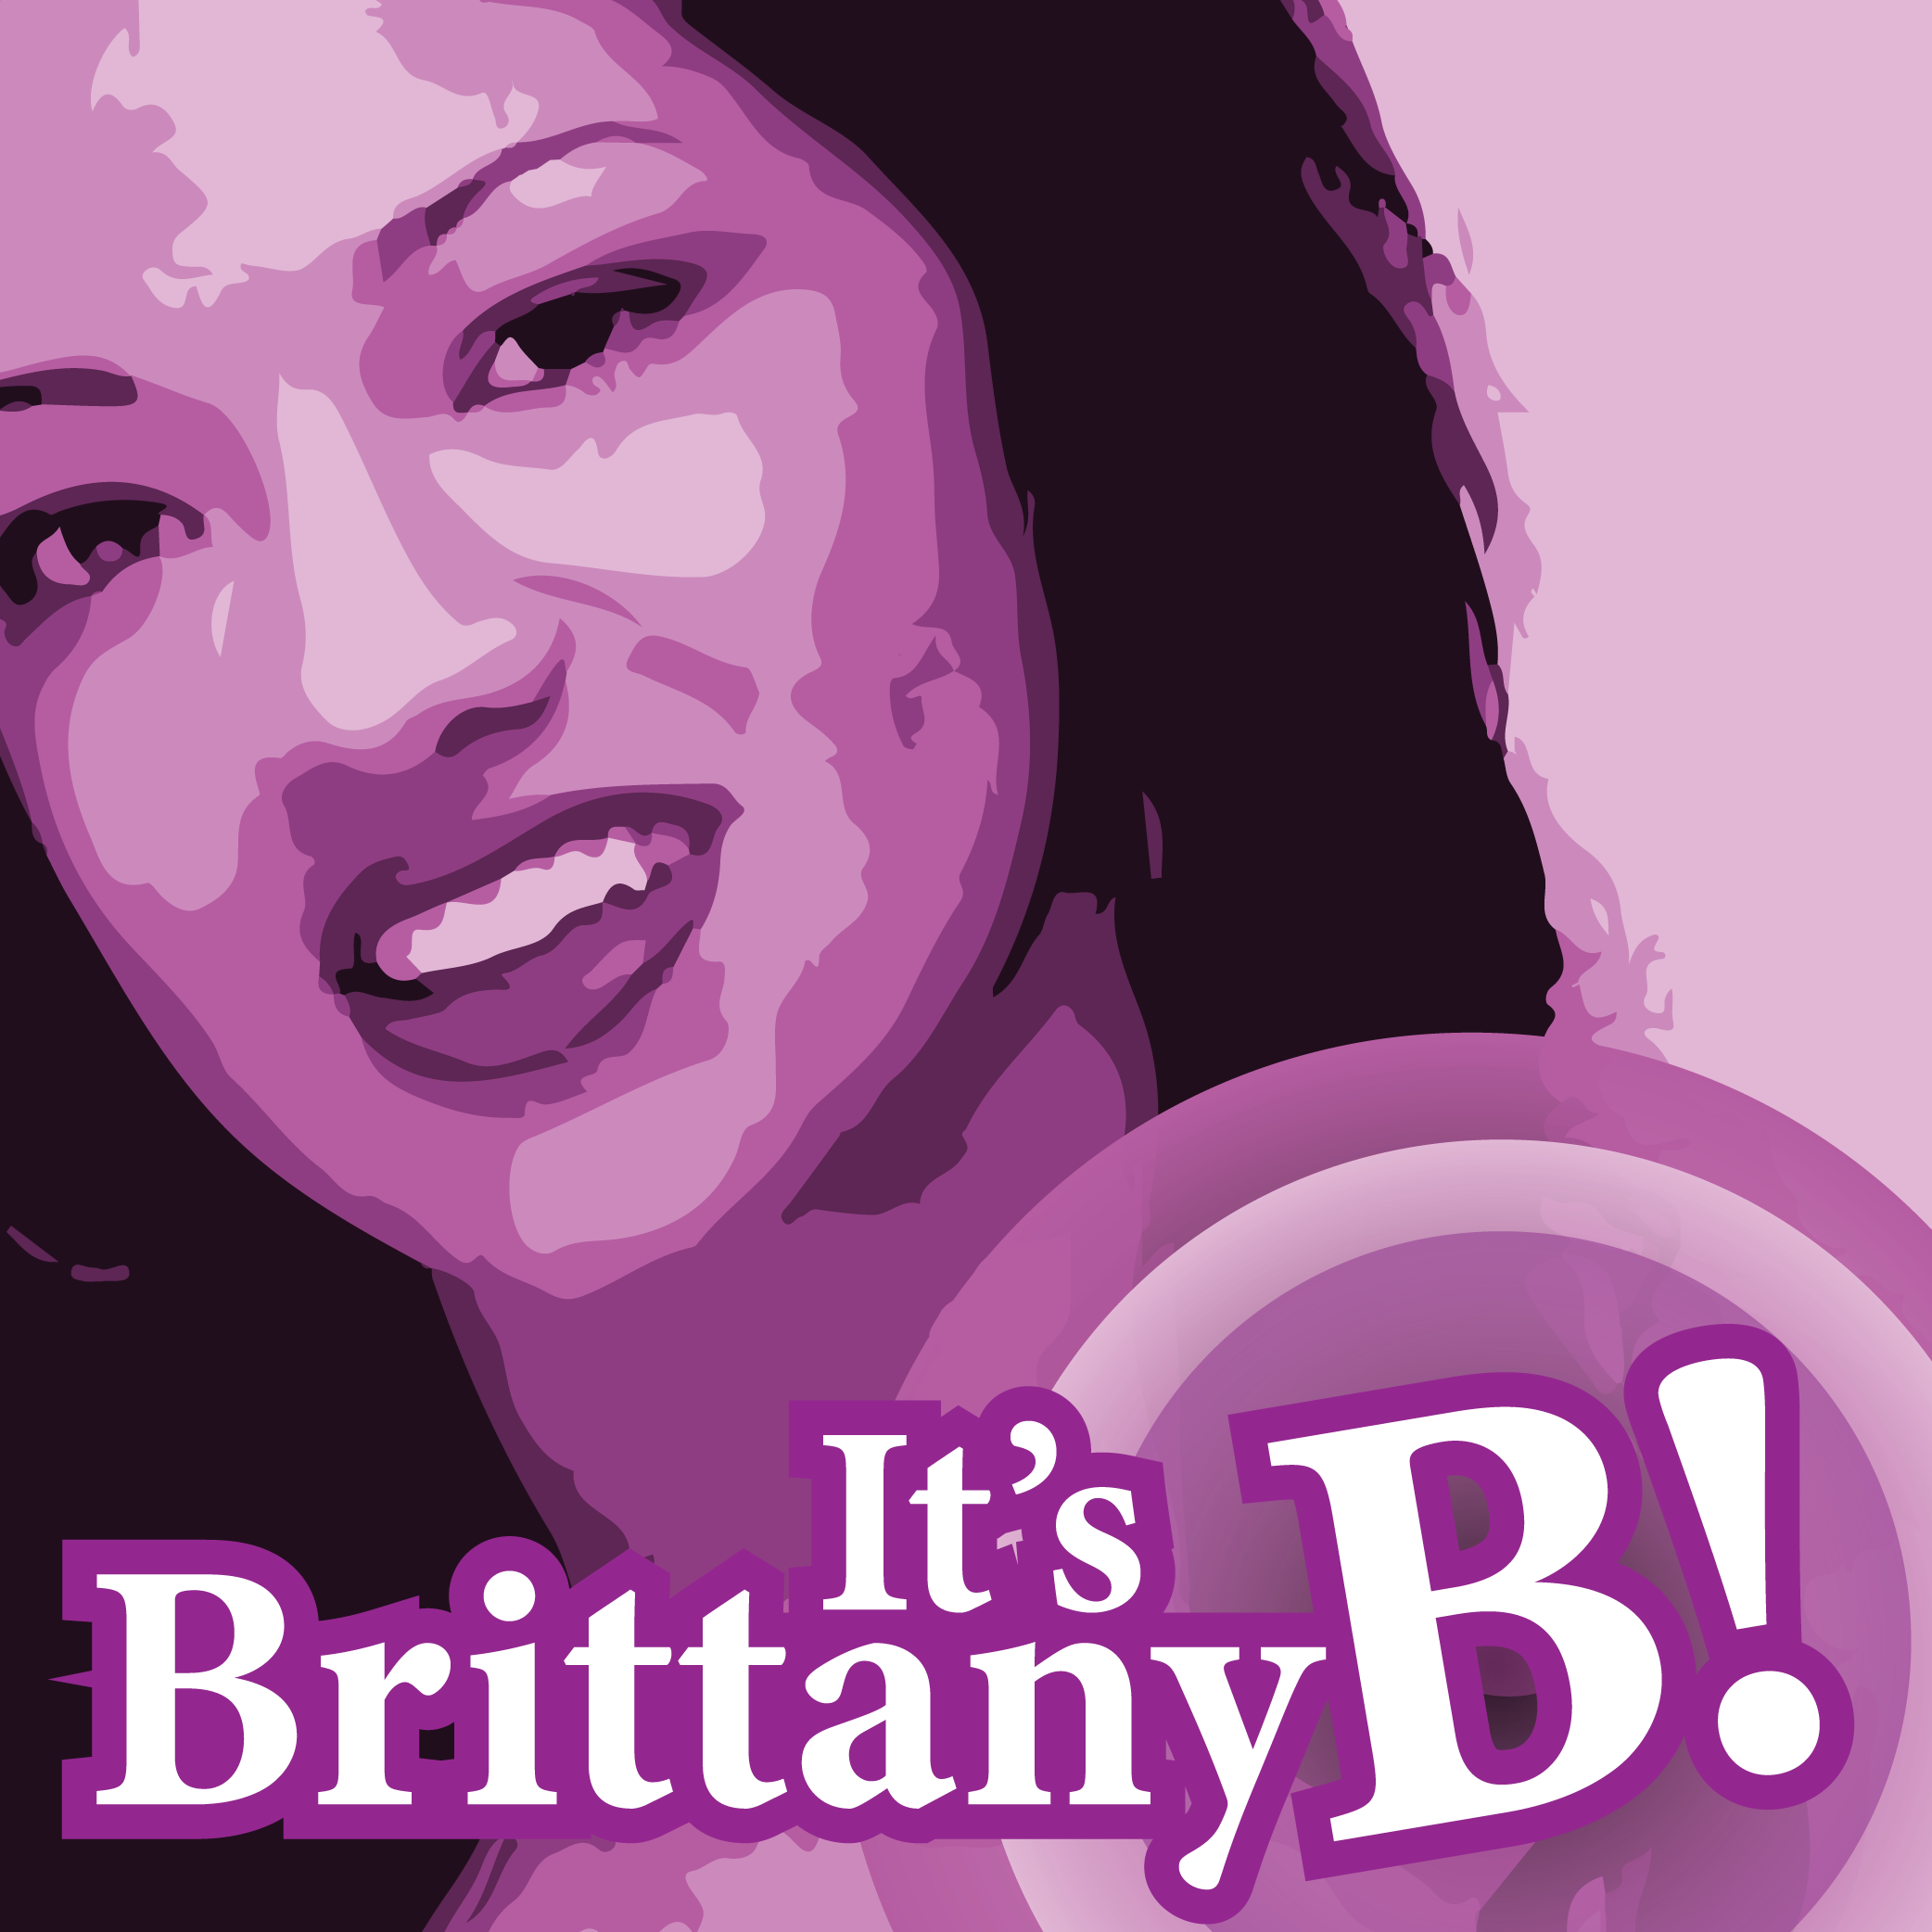 It’s Brittany B